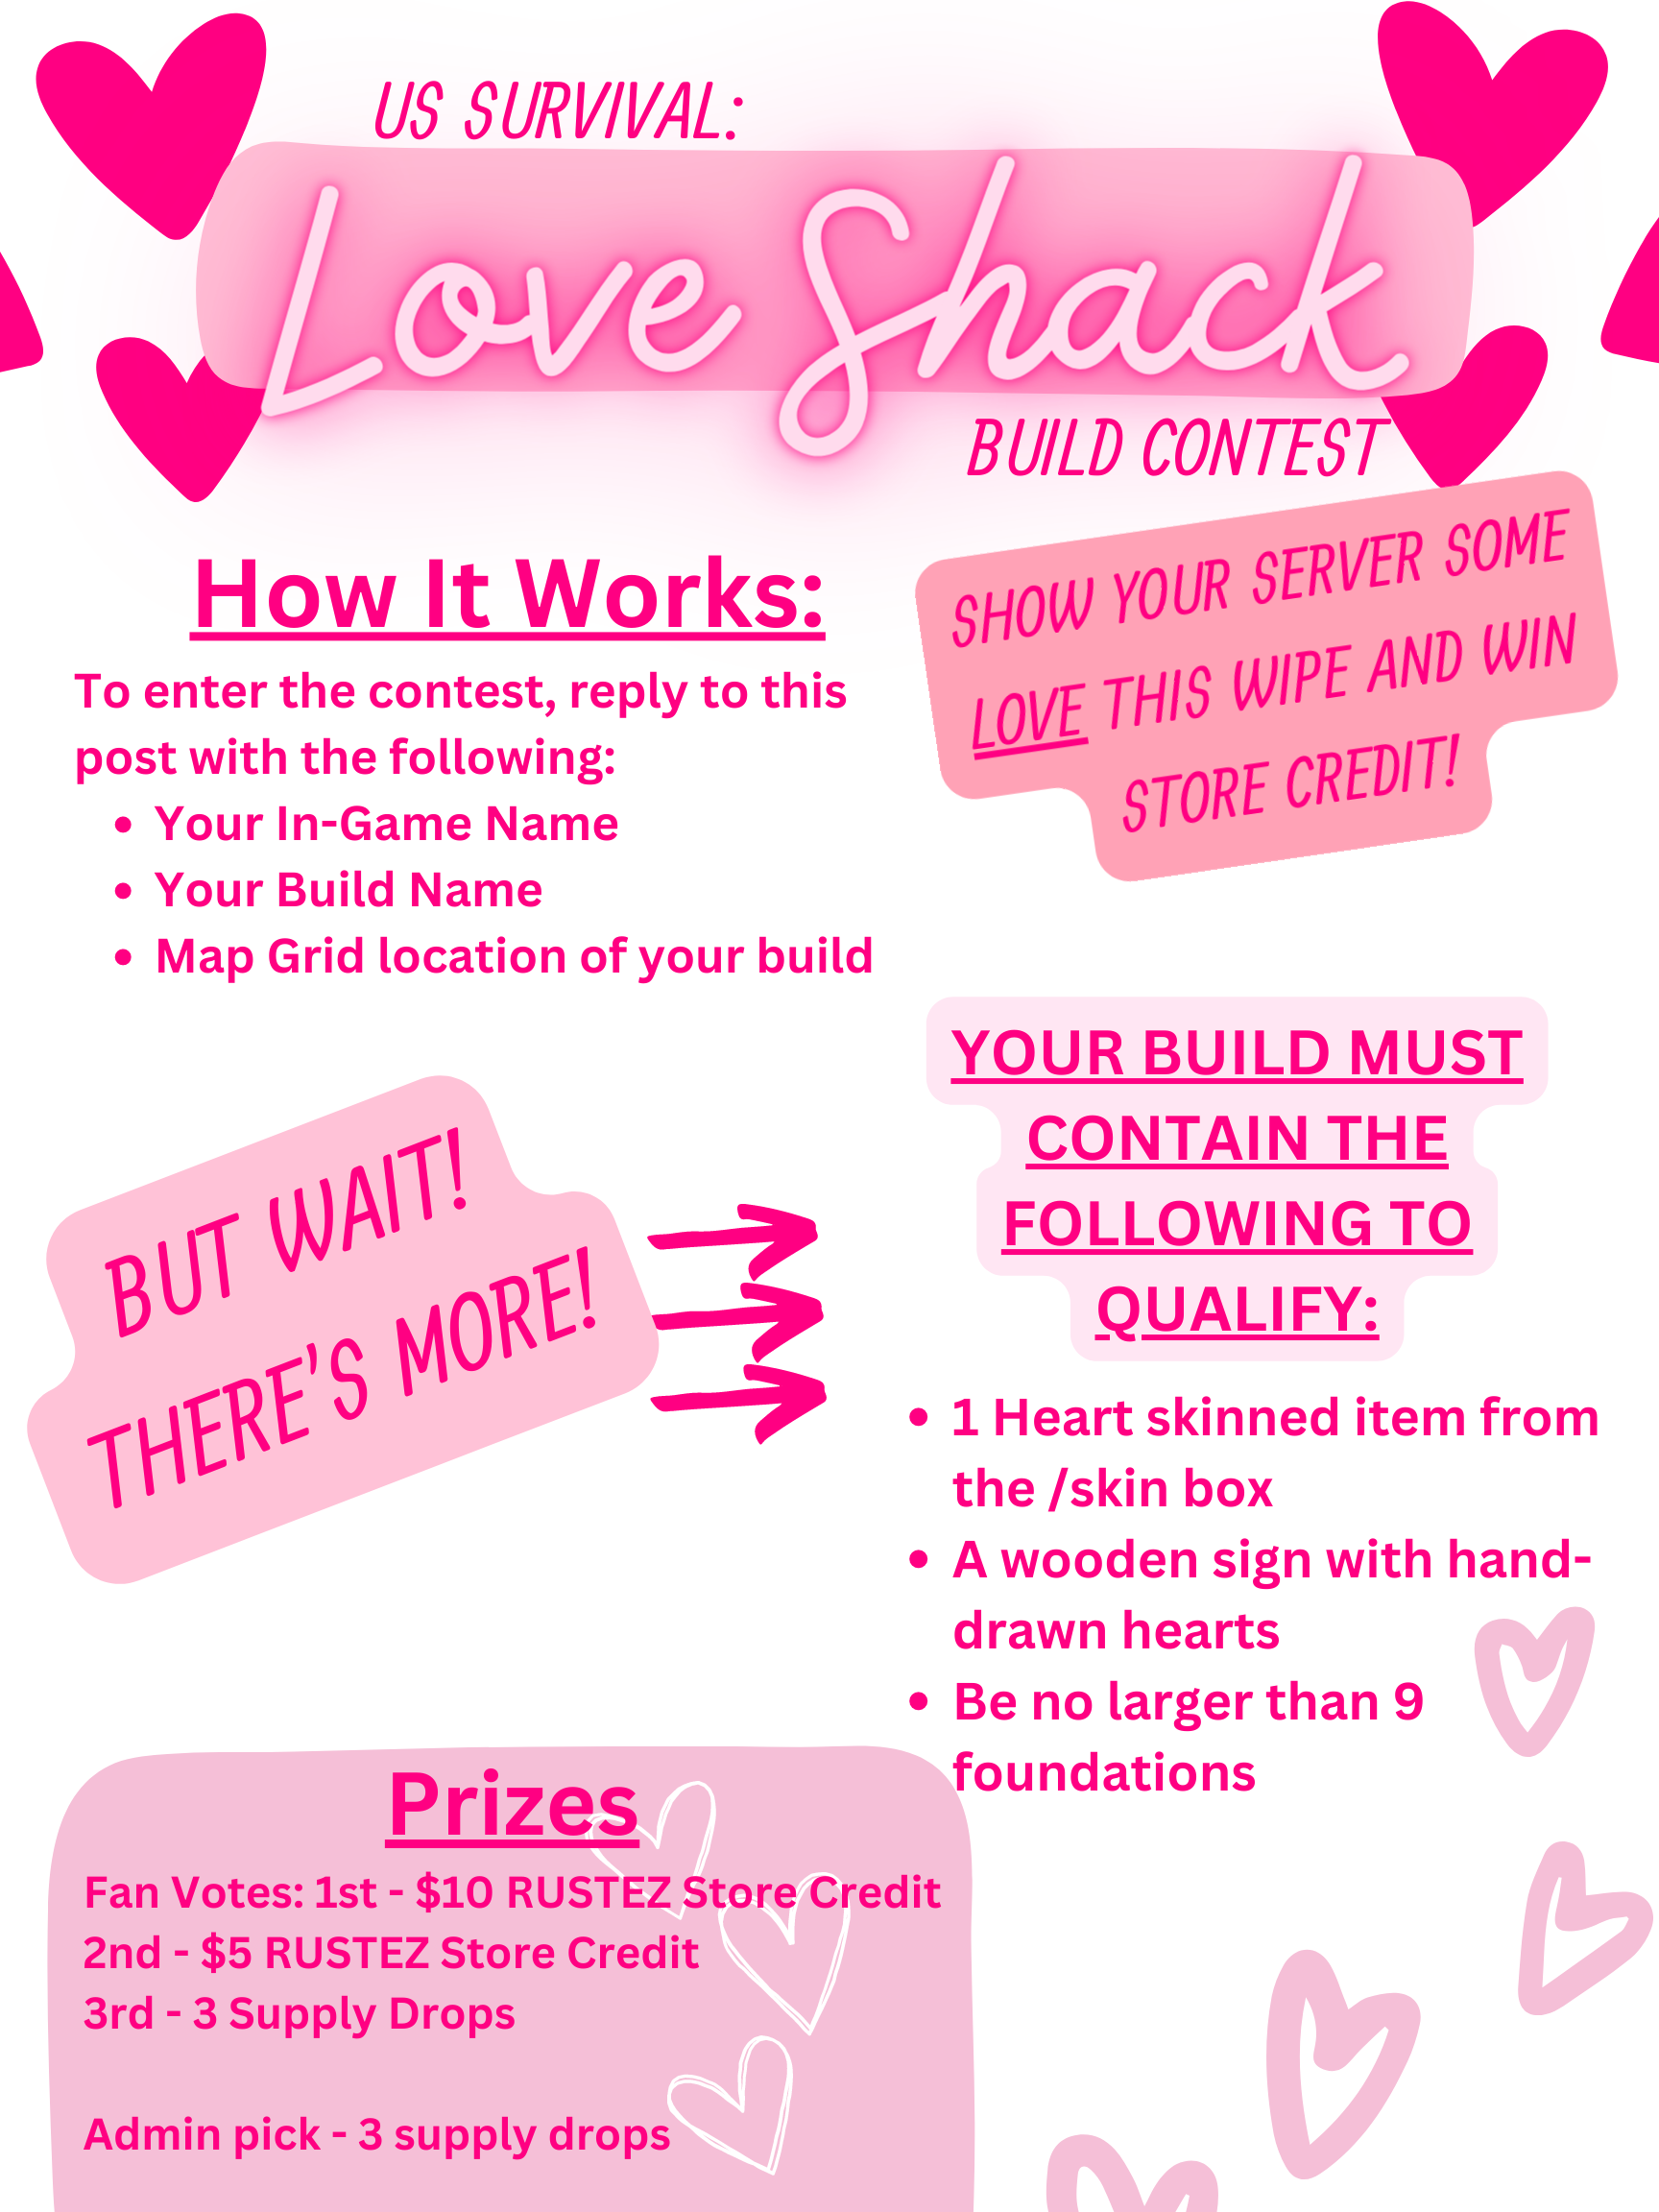 US Survival: Love Shack Build Contest!